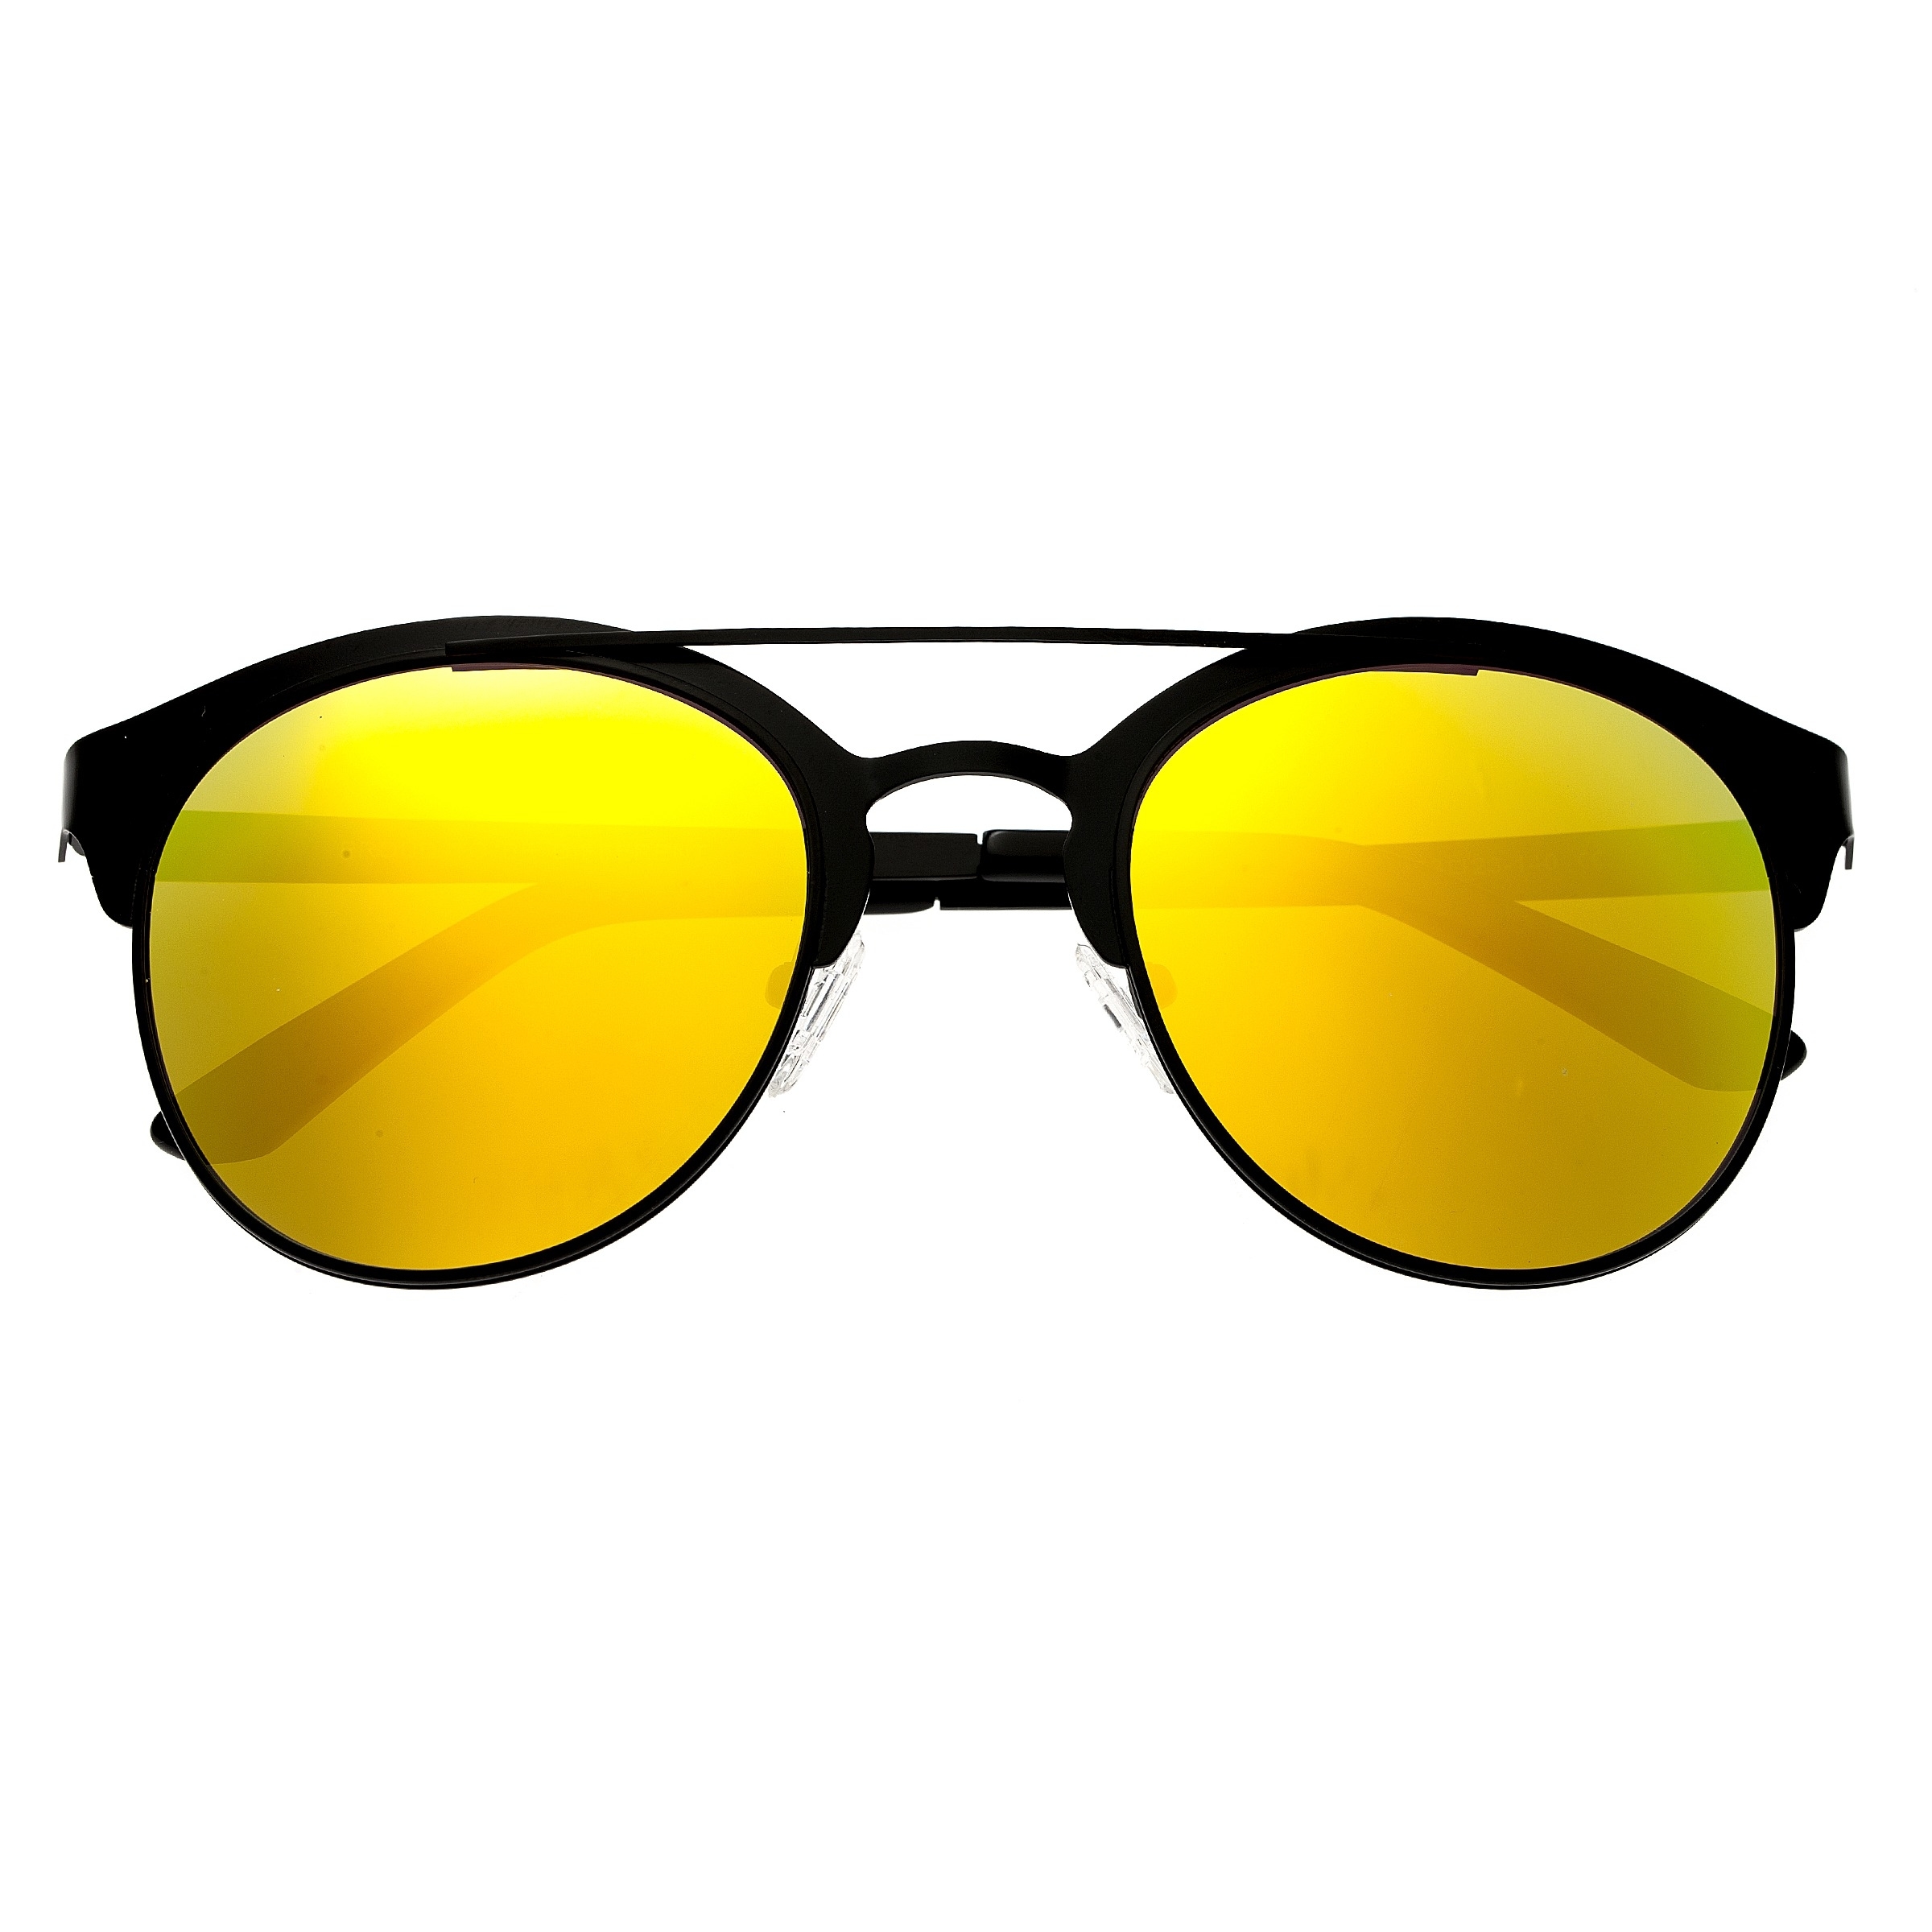 Breed Sunglasses BSG036BN Phoenix Sunglasses - Polarized Carbon Titanium Frame - image 5 of 6